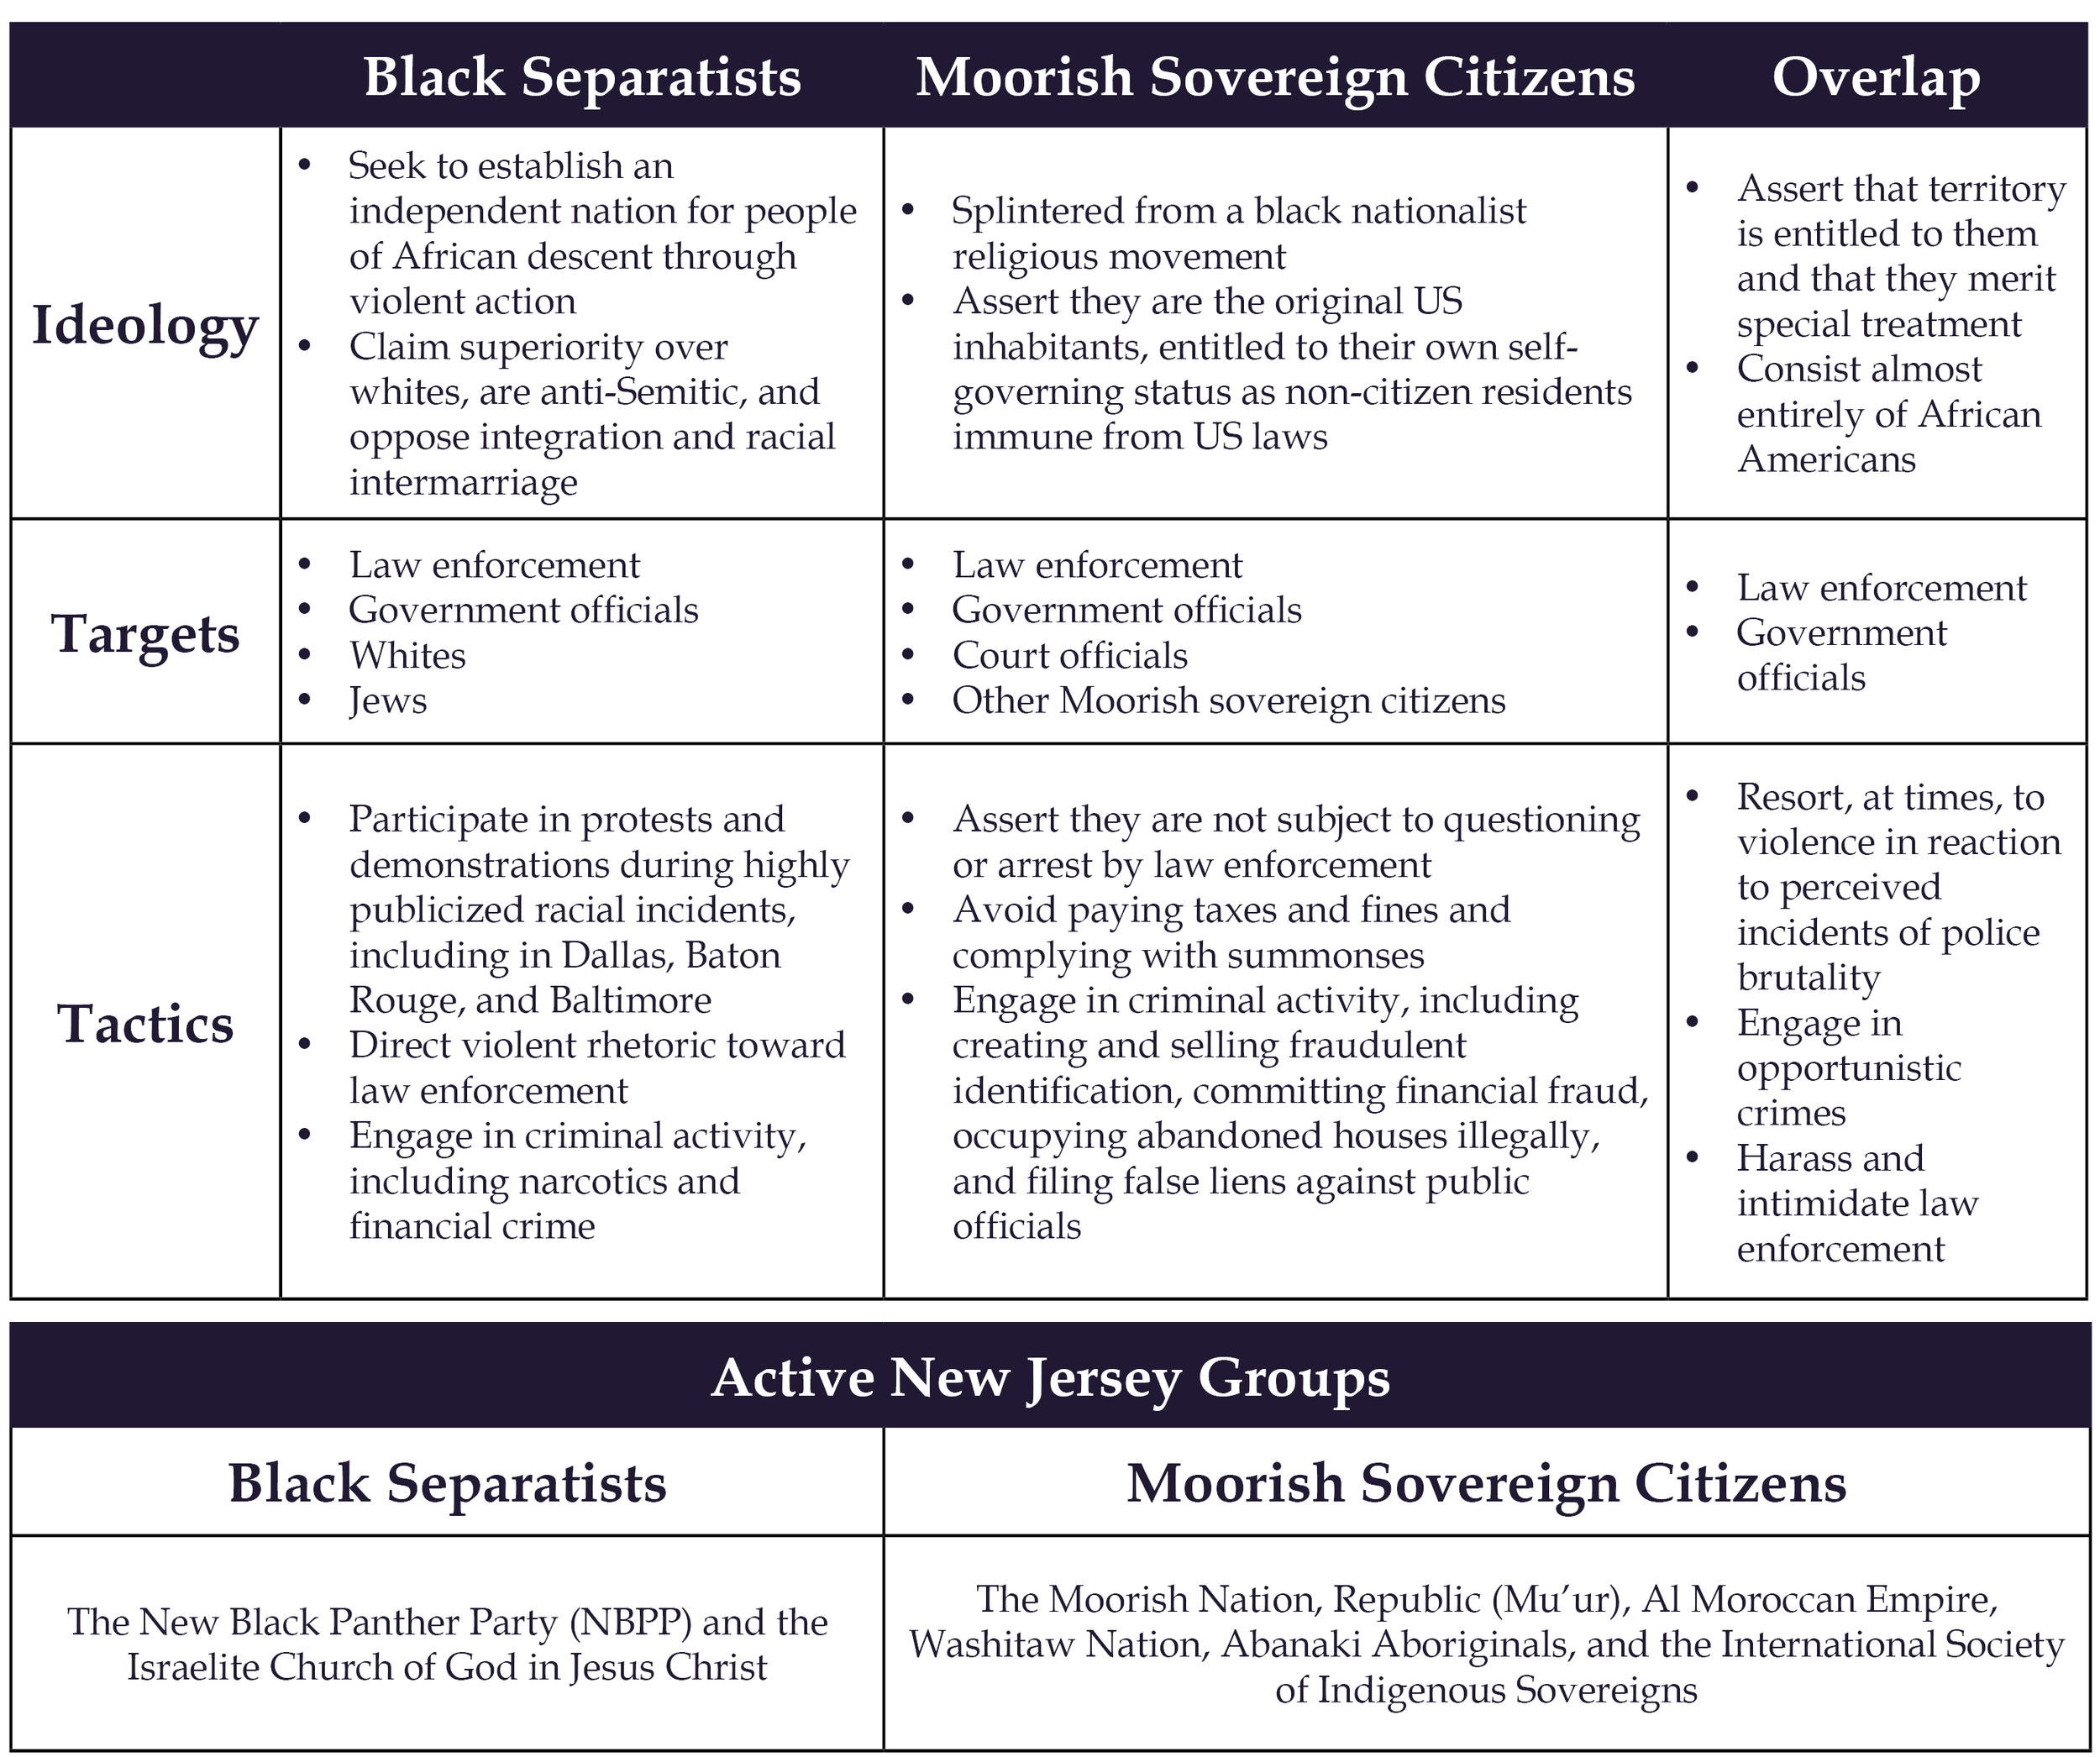 Overlap Between Black Separatists and Moorish Sovereign Citizen Extremists